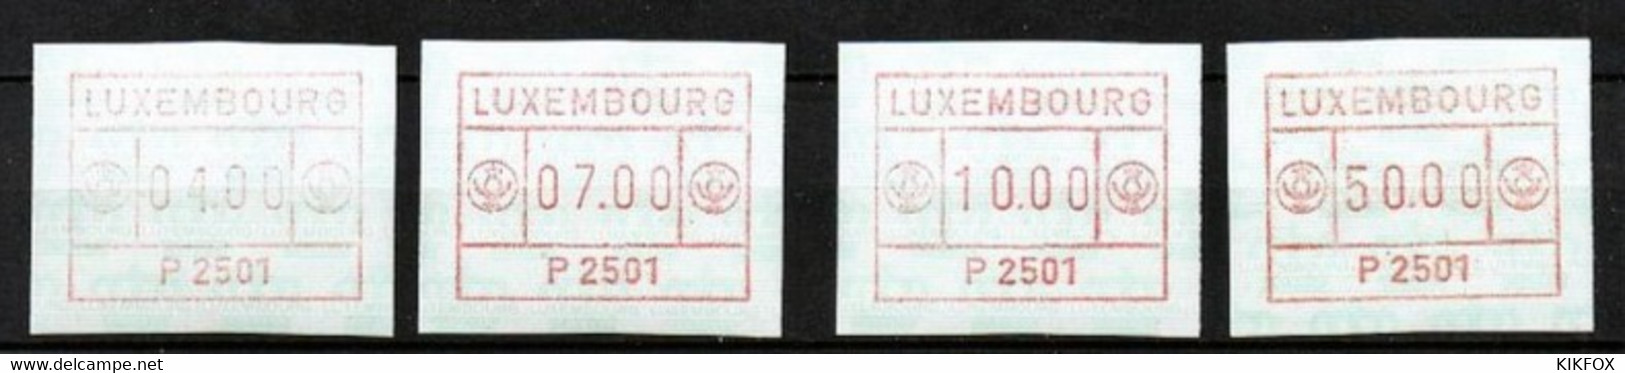 Luxembourg, Luxemburg , 1983, MI 1 ,AUTOMATENMARKEN, DISTRIBUTEUR , 4 WERTE - Viñetas De Franqueo